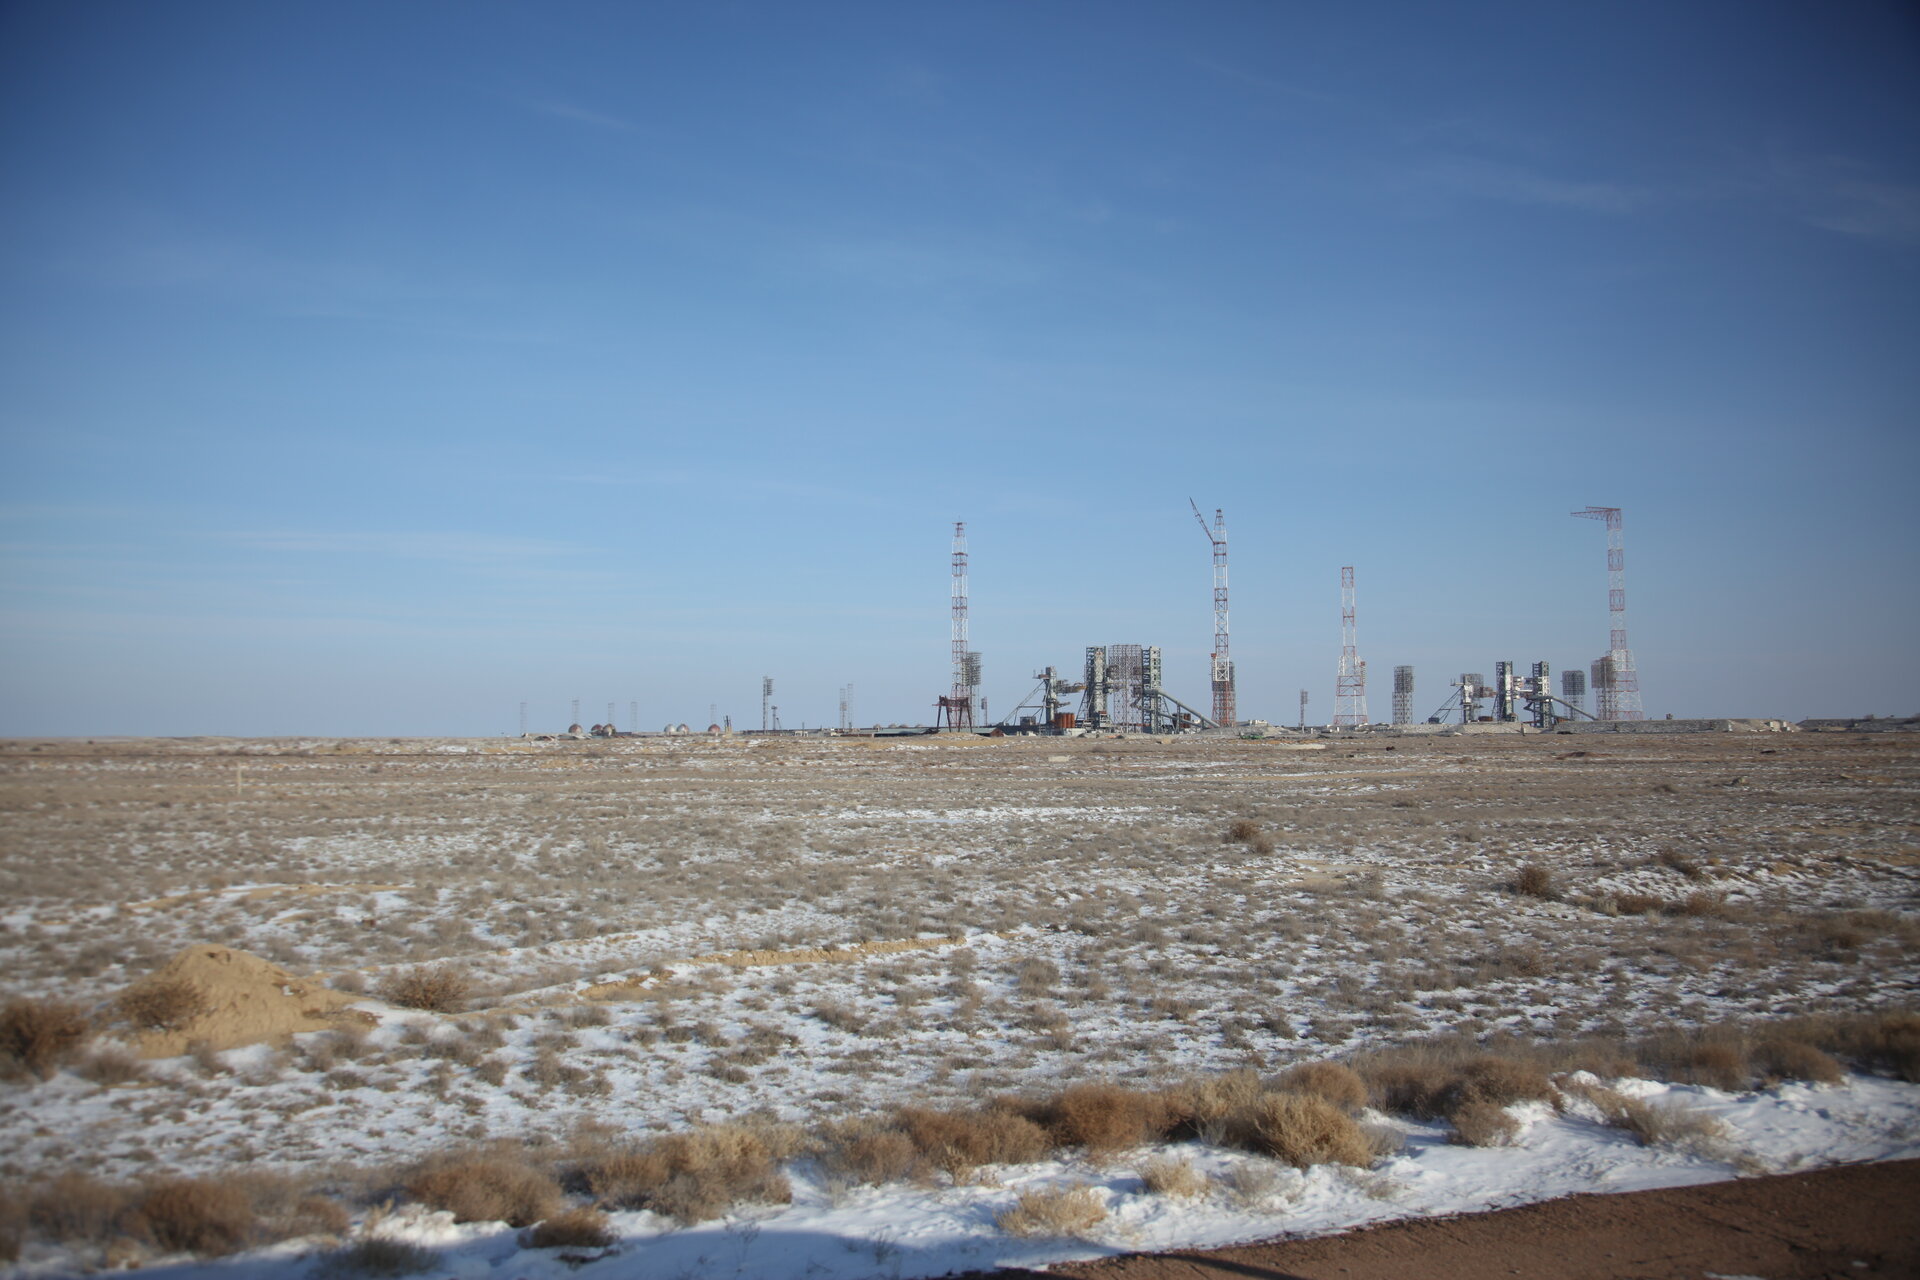 Baikonur launch site